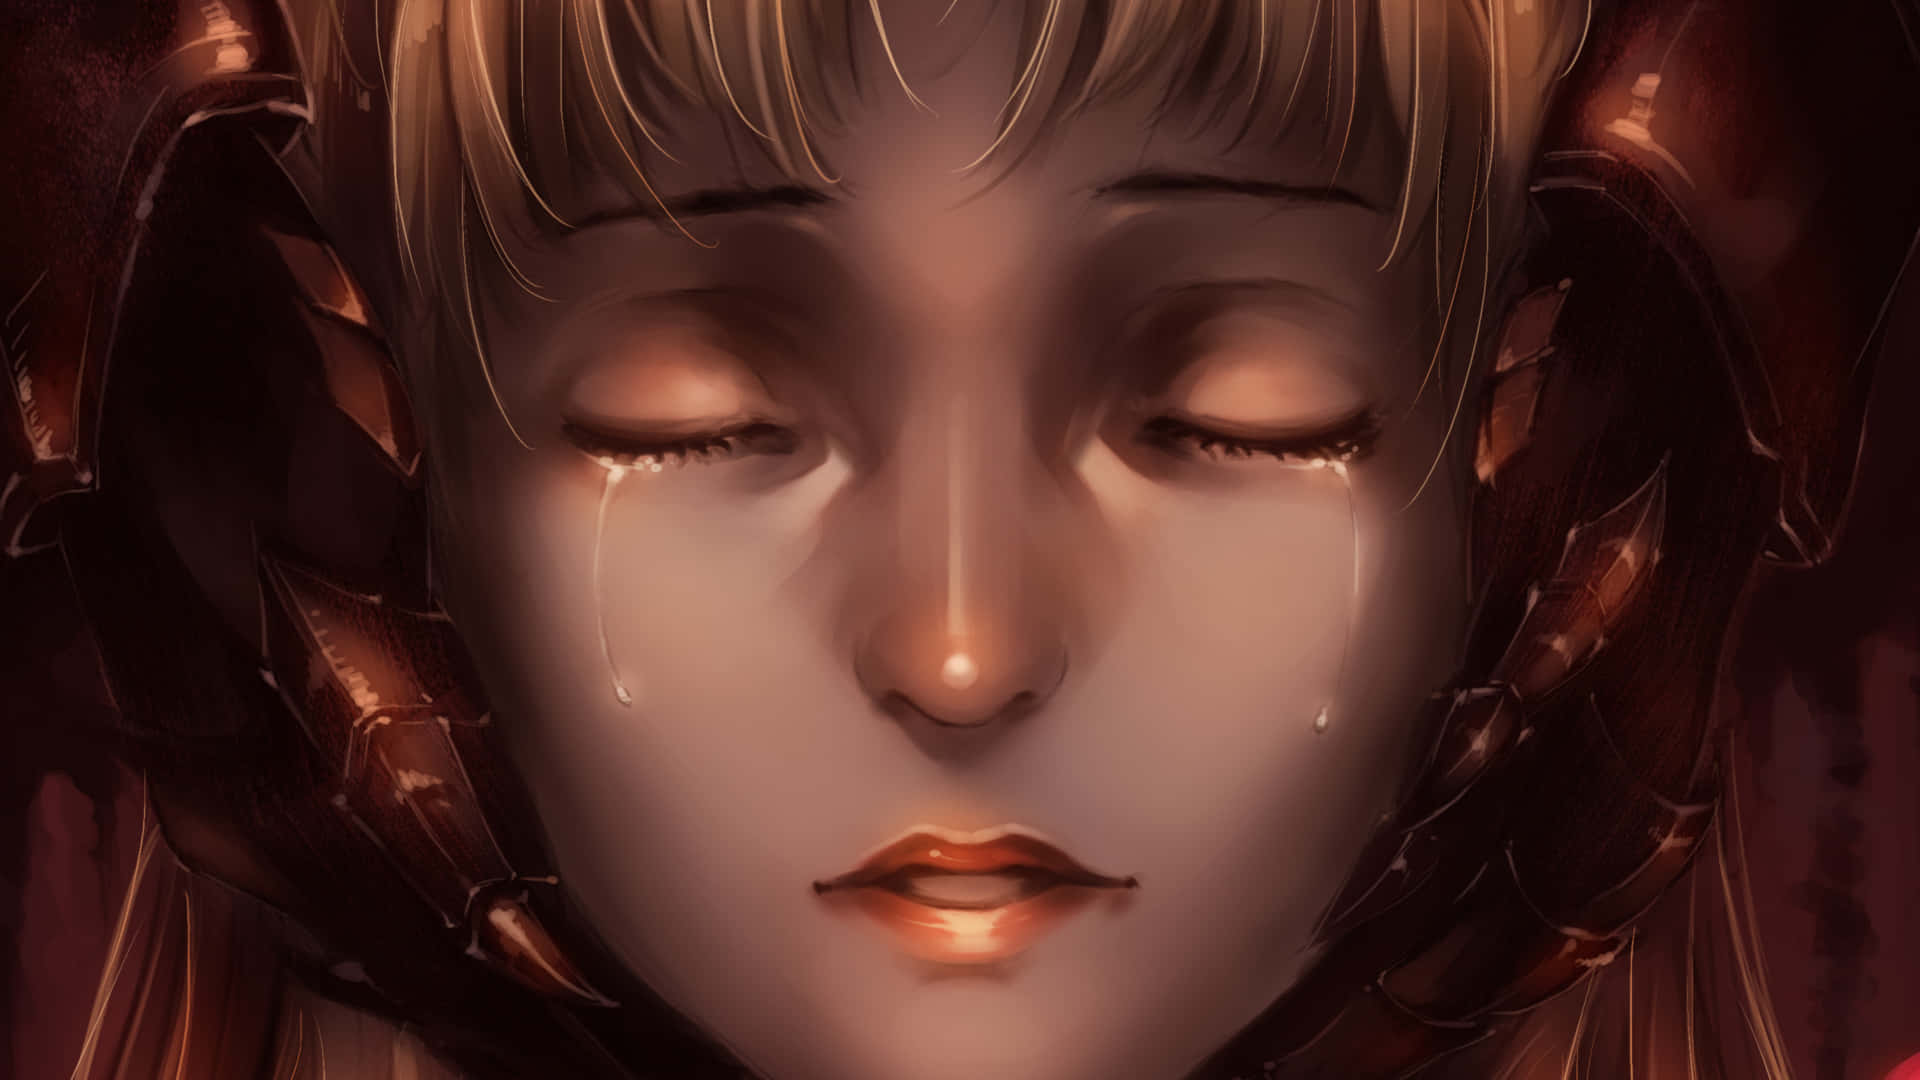 Girl Crying Closed Eyes Digital Art Wallpaper